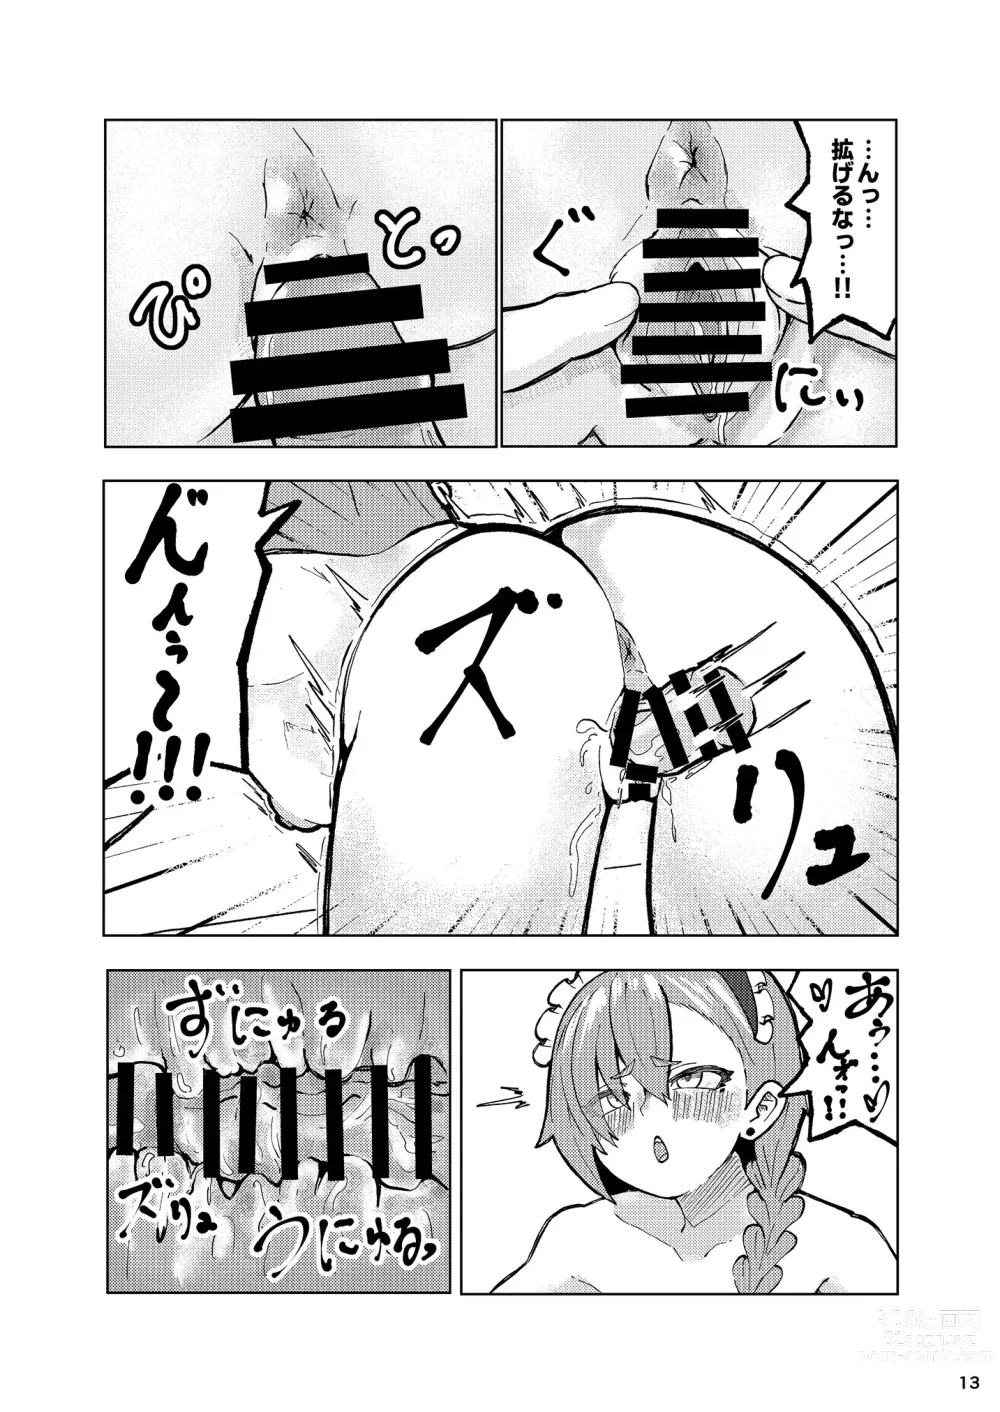 Page 13 of doujinshi Neru Ecchi